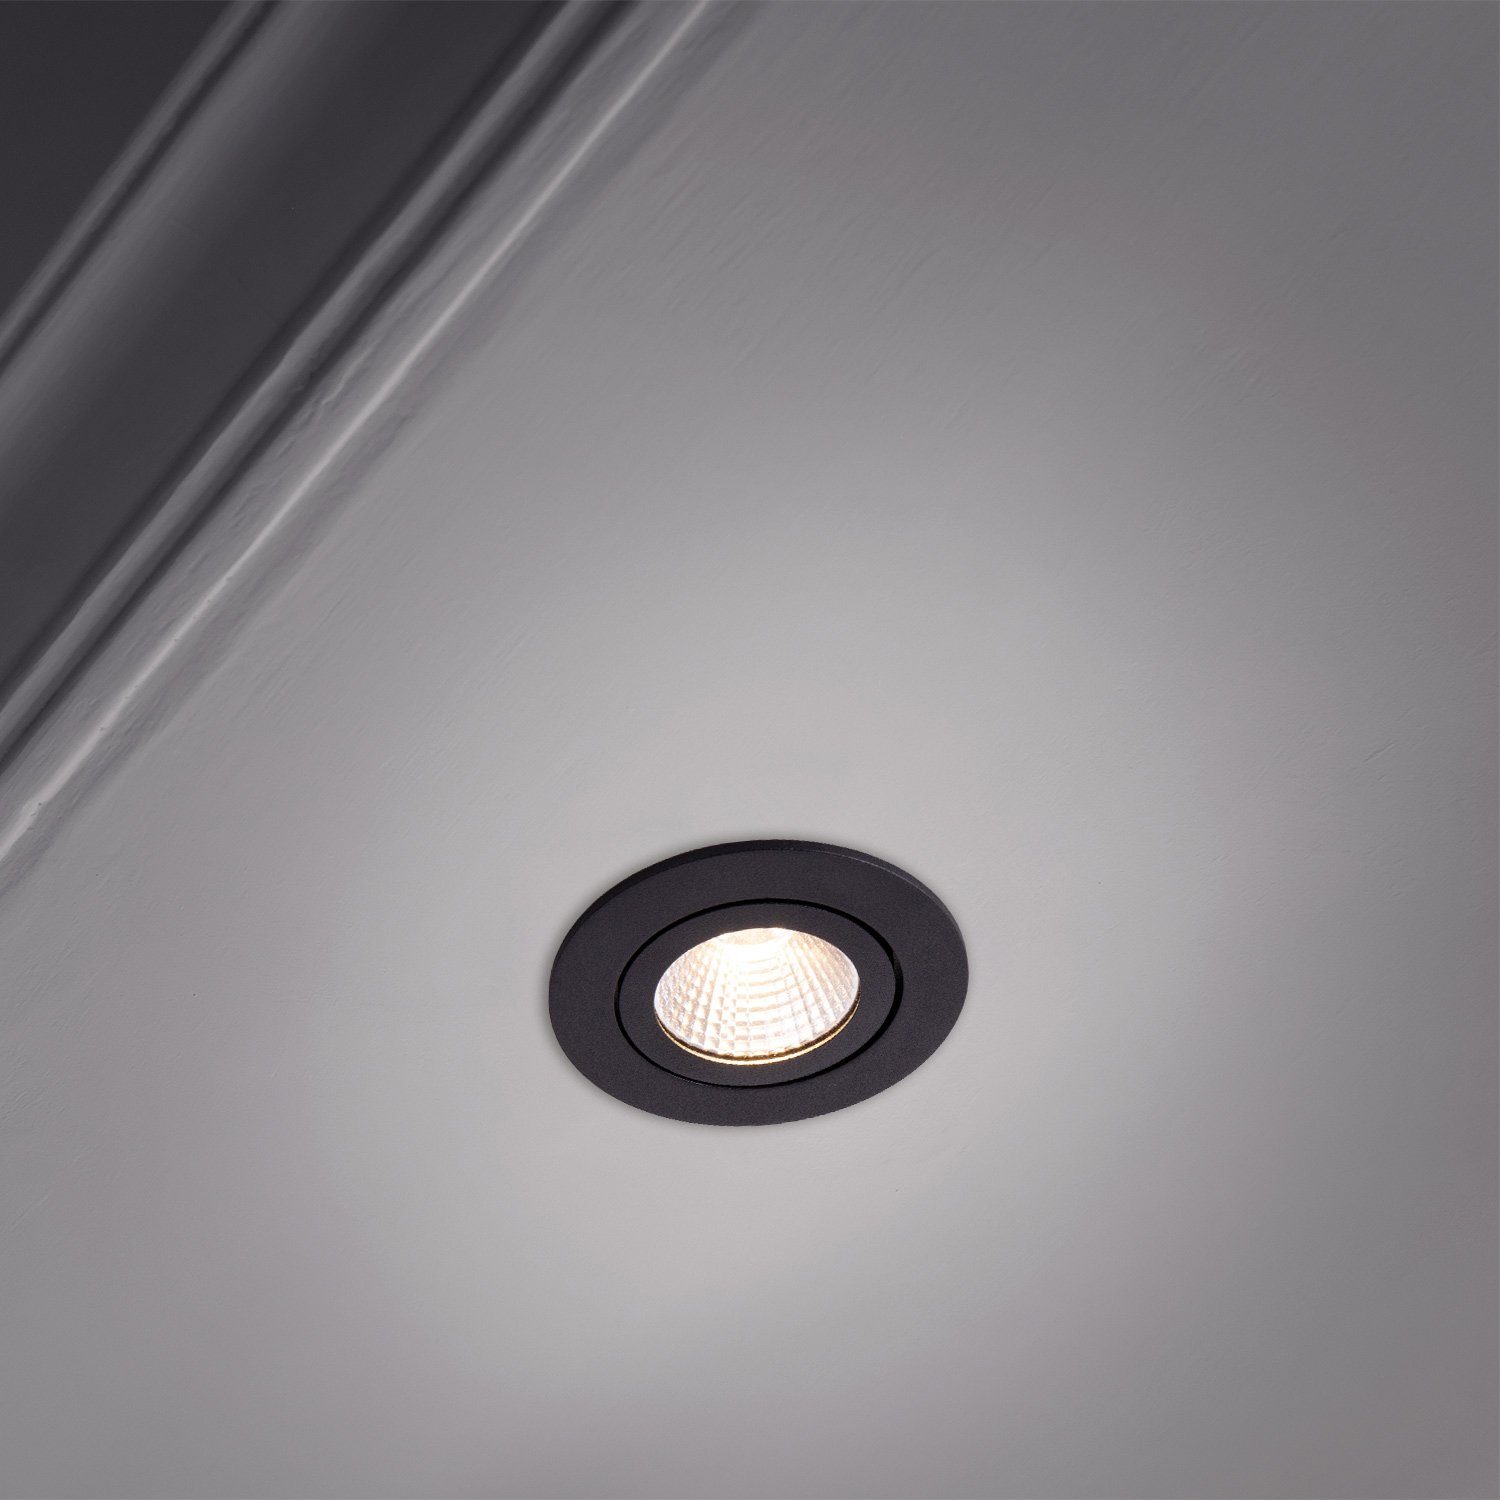 Paco Home Einbaustrahler Flach Spotlight LED Schwenkbar Einbauleuchte Rita, LED Strahler wechselbar, LED Warmweiß, dimmbar